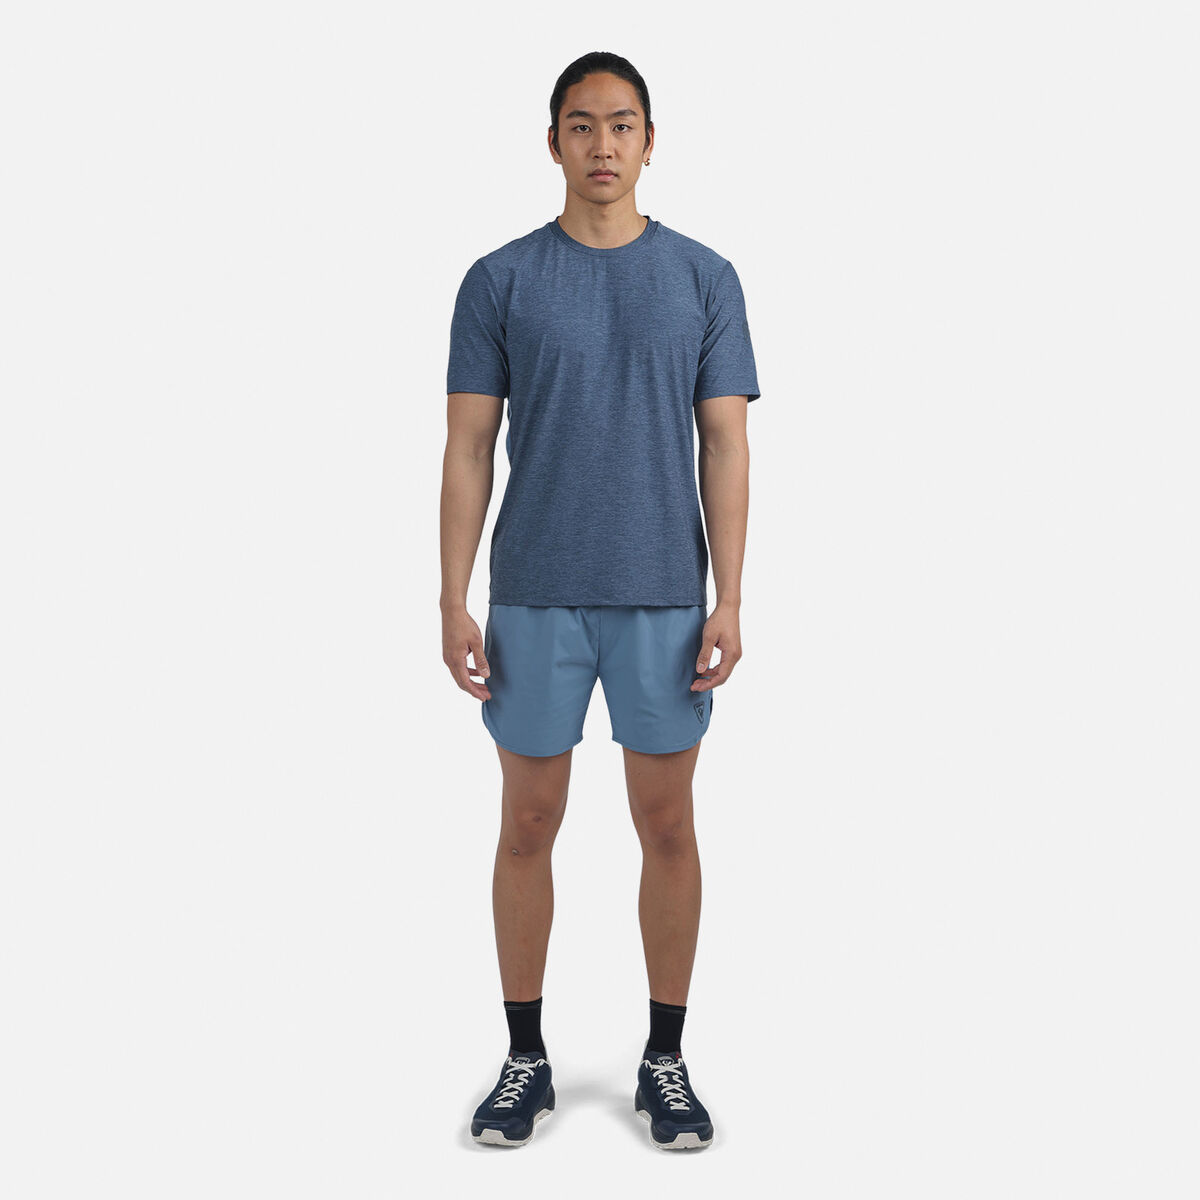 Rossignol Men's 2-in-1 Active Shorts Blue